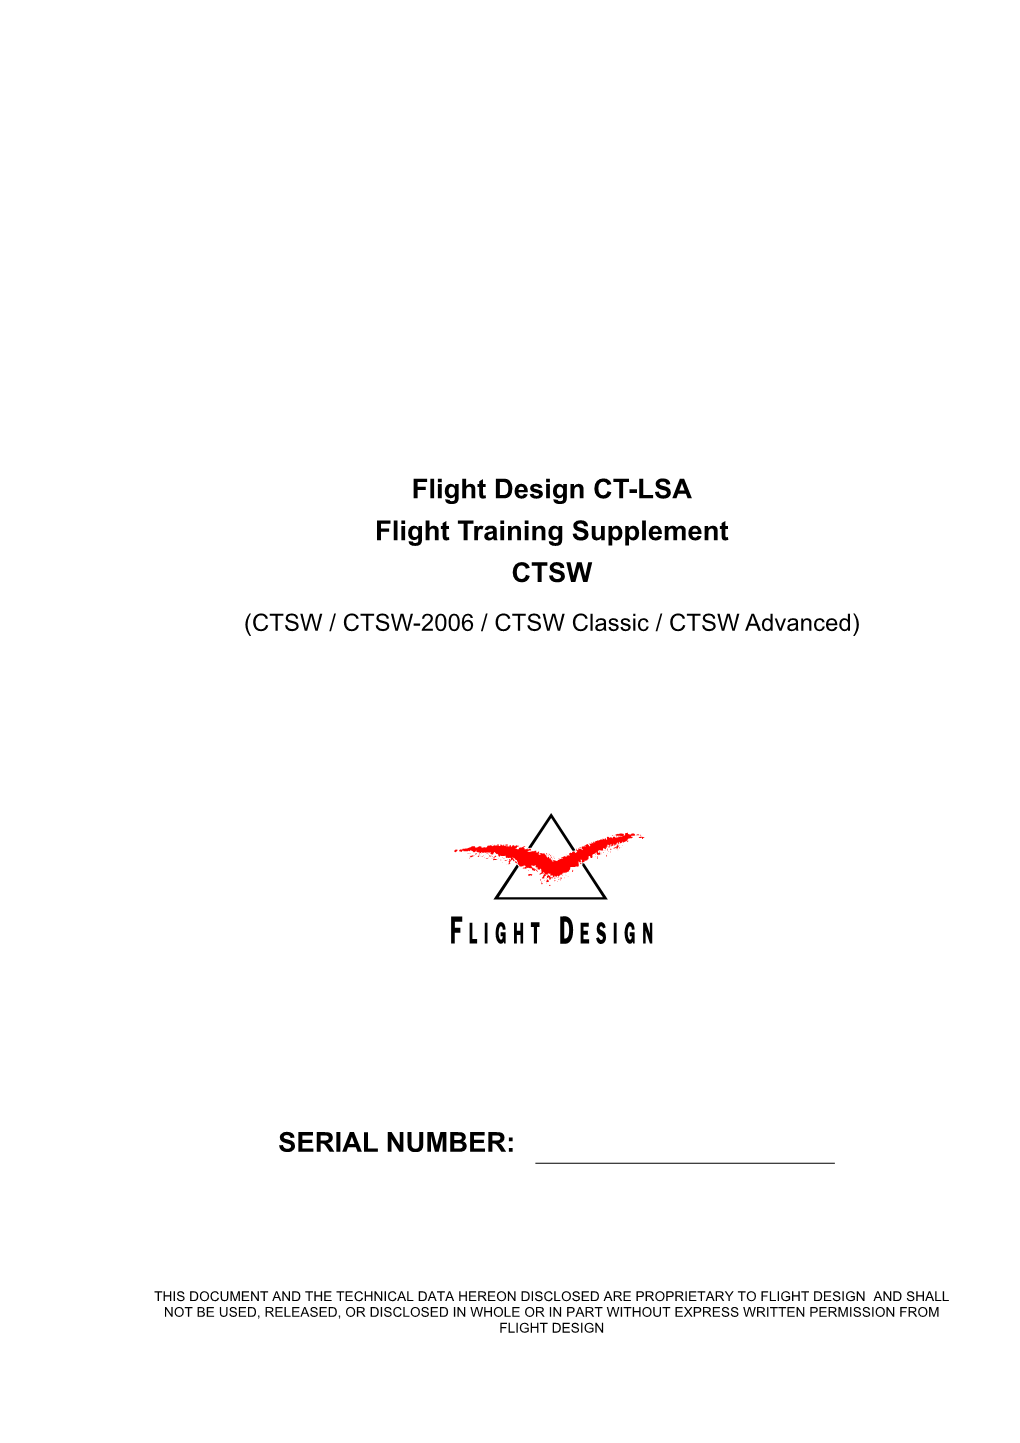 Flight Design CT-LSA Flight Training Supplement CTSW SERIAL NUMBER